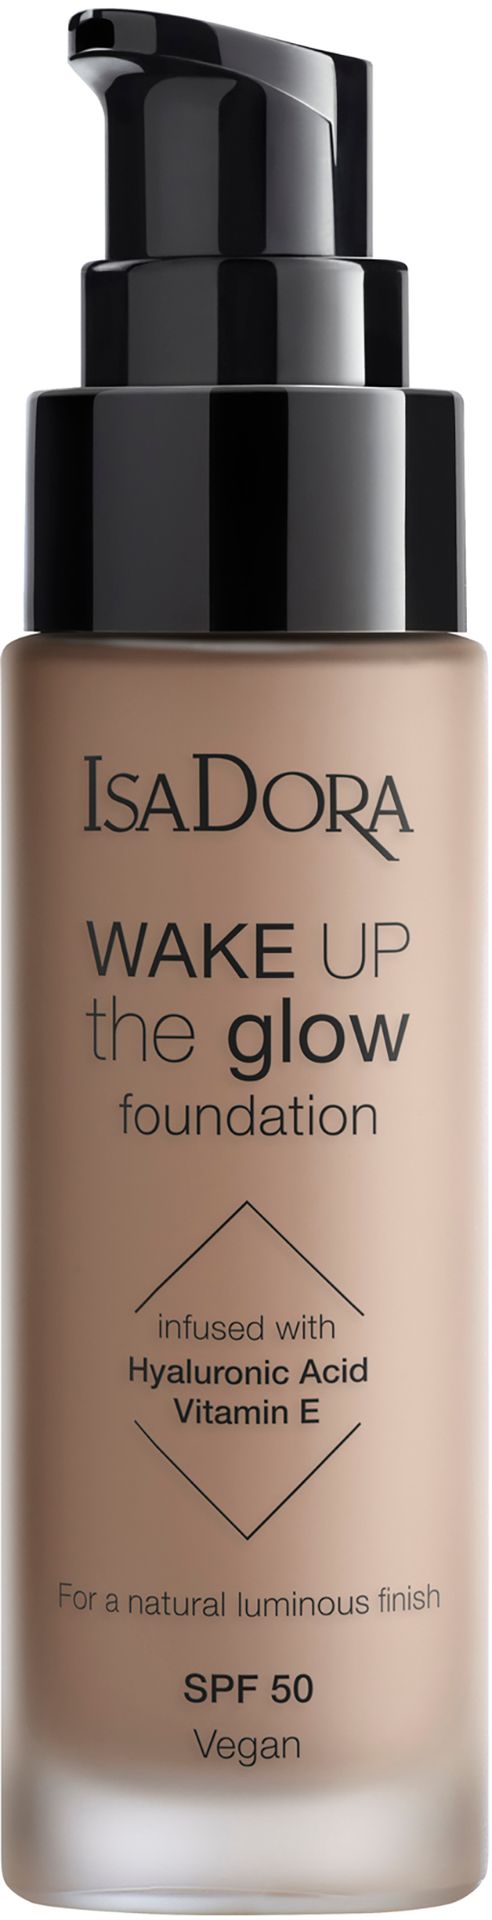 IsaDora Wake Up the Glow Foundation SPF50 7C